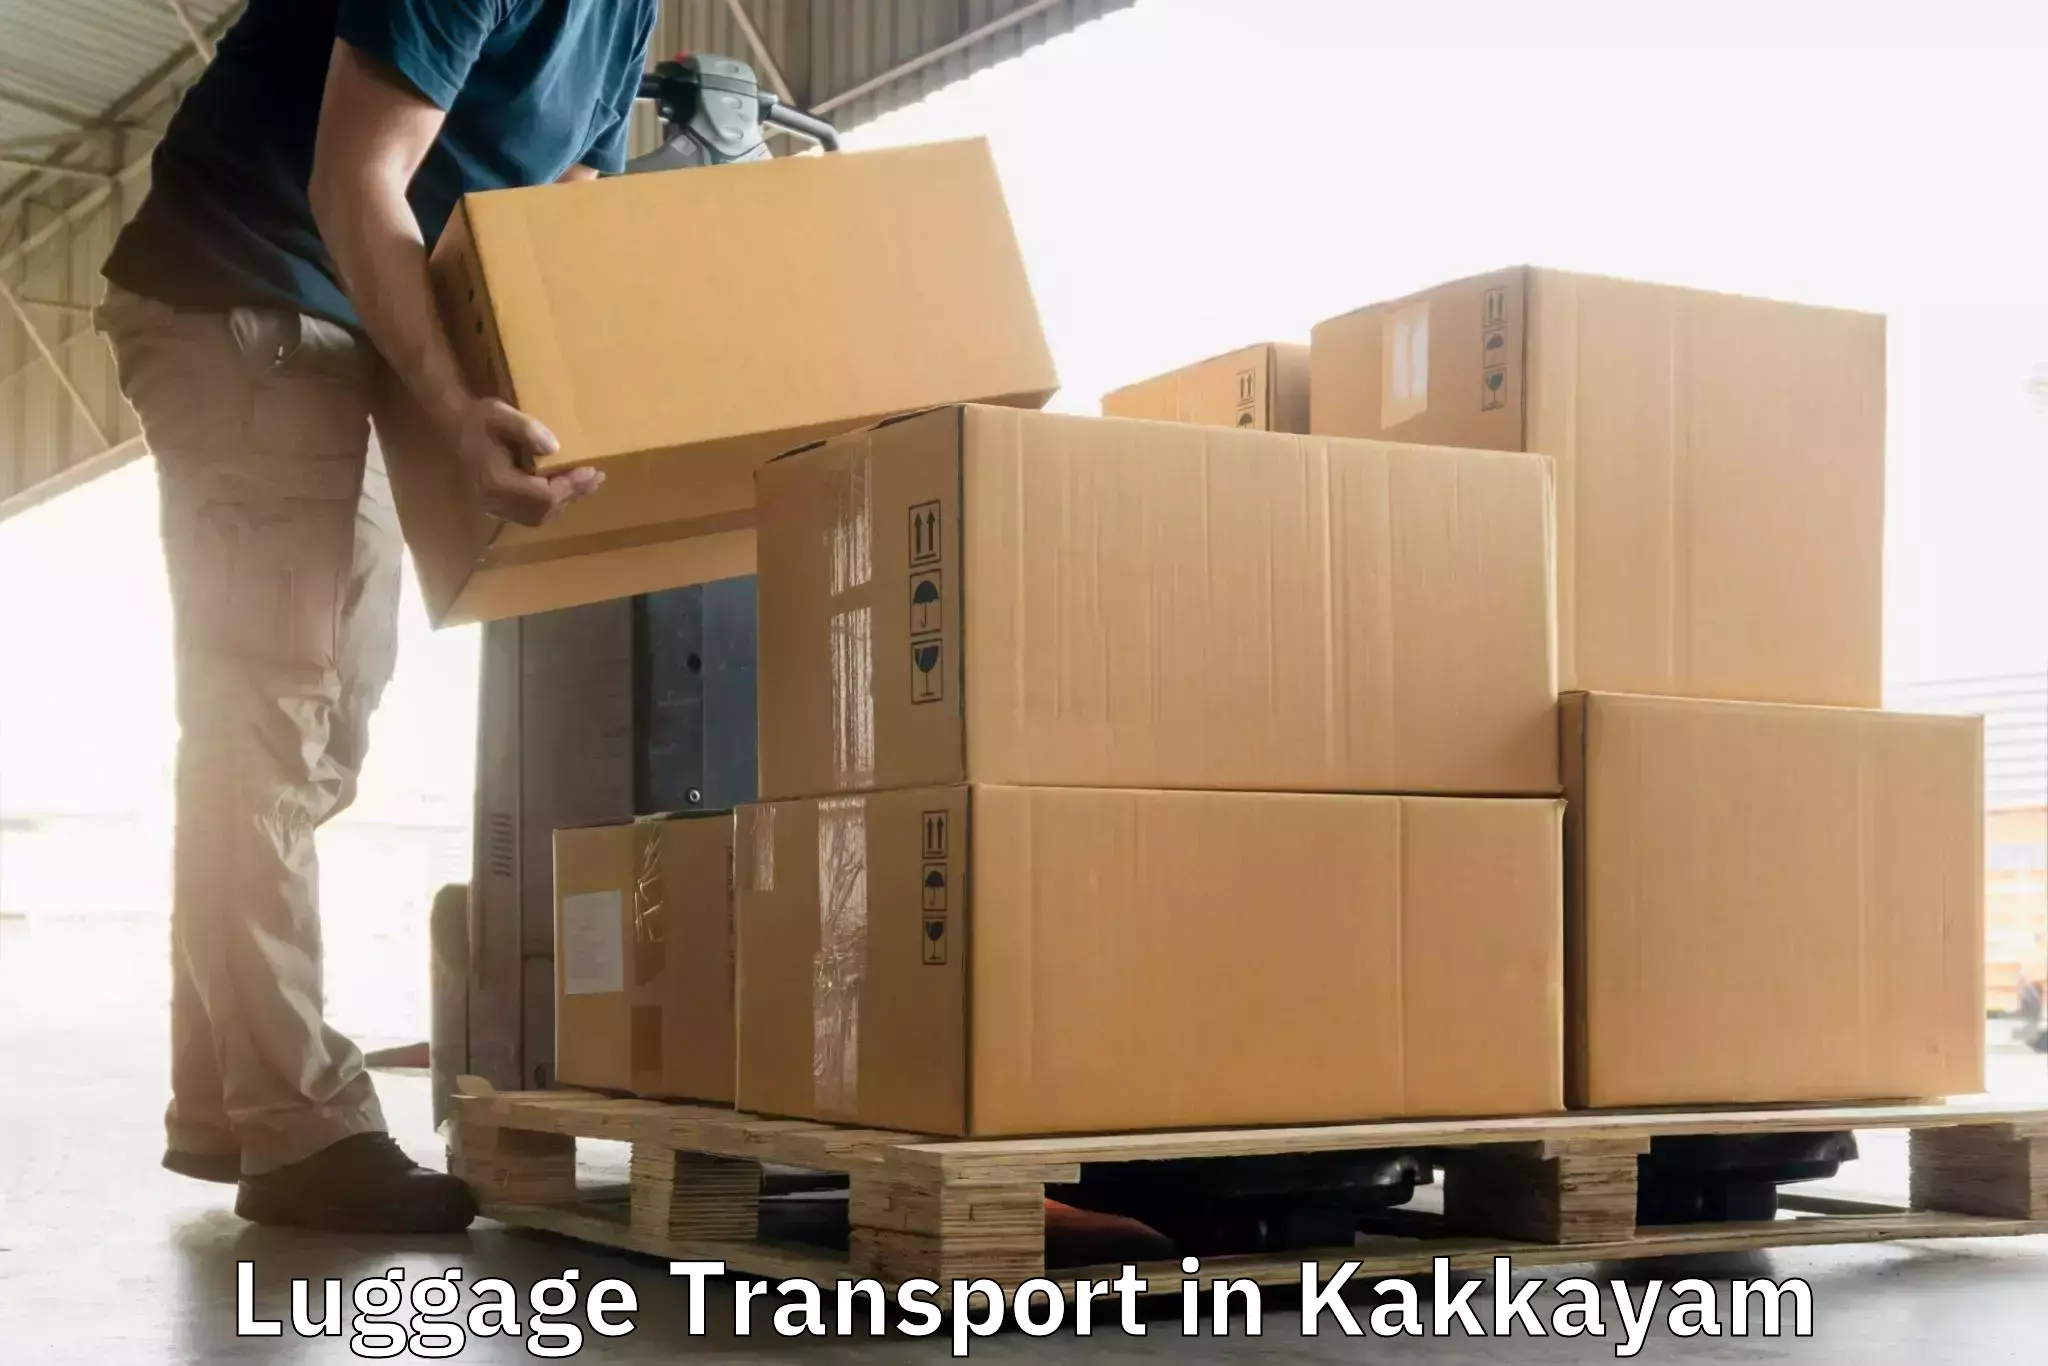 Luggage shipping trends in Kakkayam